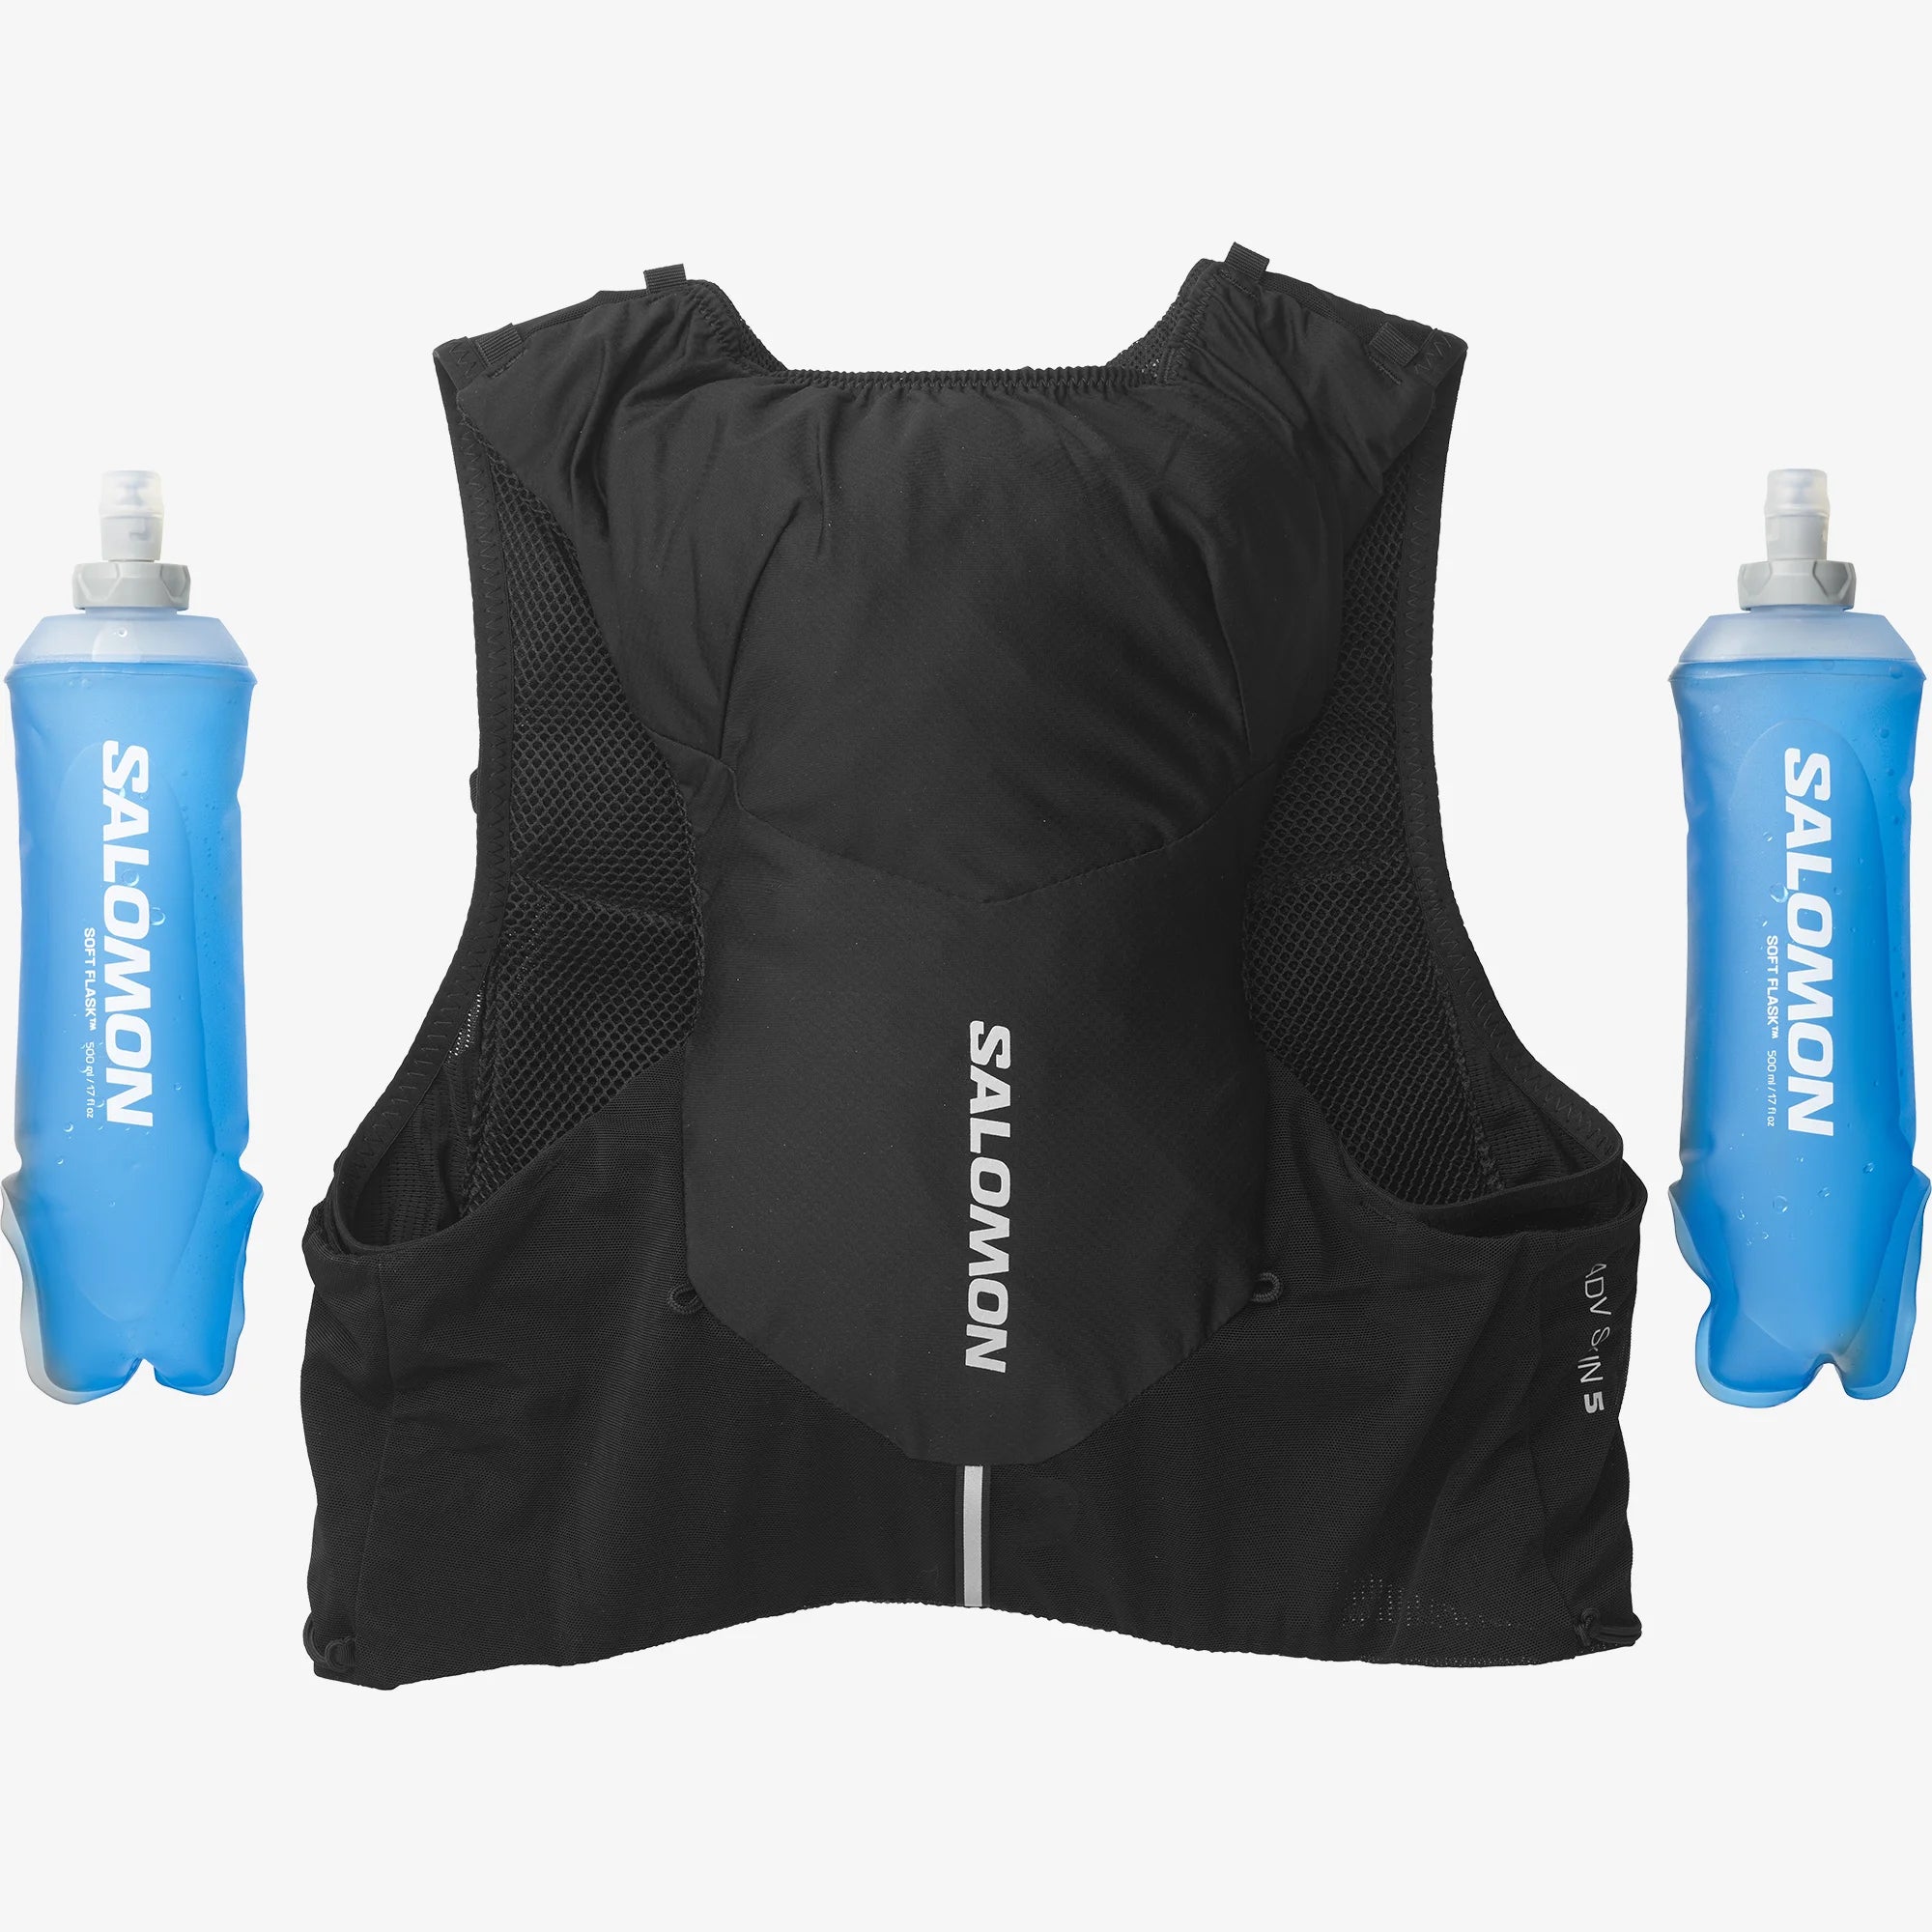 Salomon Chile - Salomon Adv Skin 5 Set Hydration Pack - Mochila Trail  Running Salomon Hombre Verde